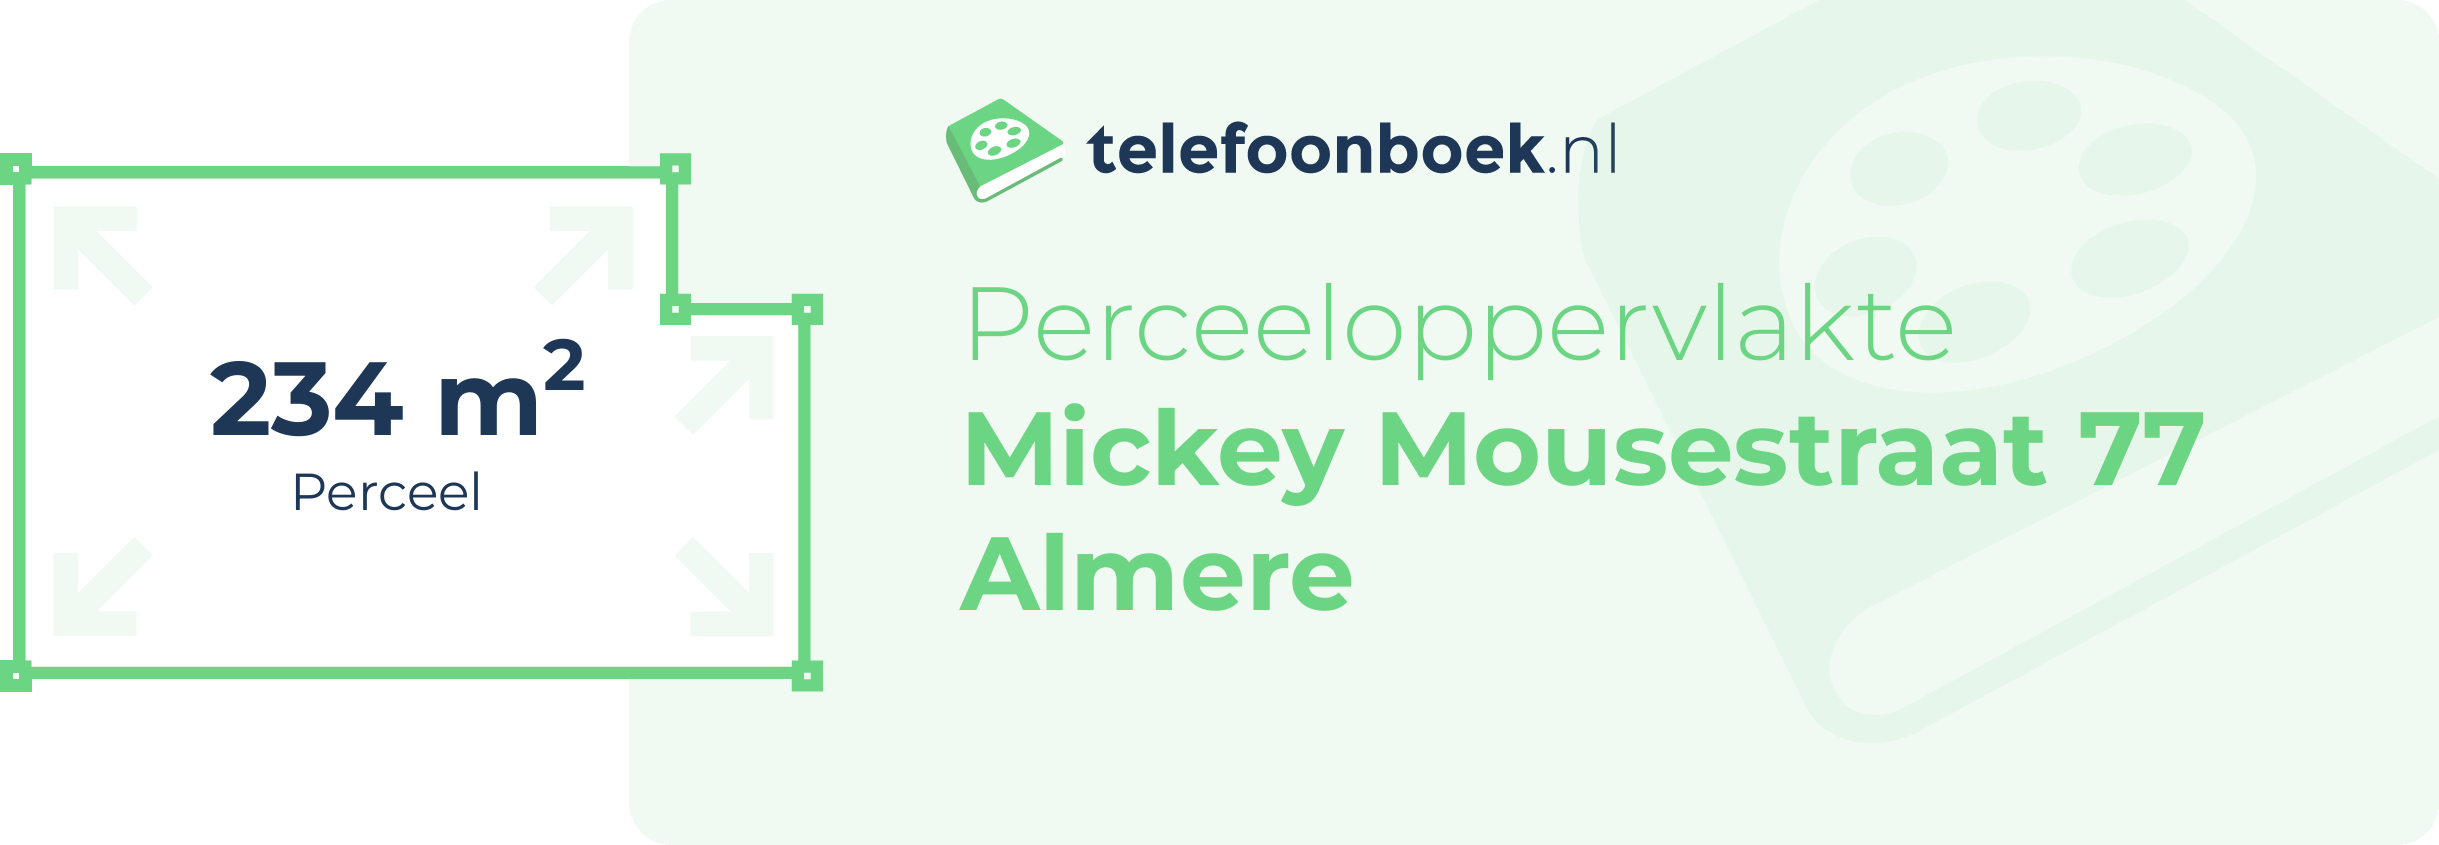 Perceeloppervlakte Mickey Mousestraat 77 Almere